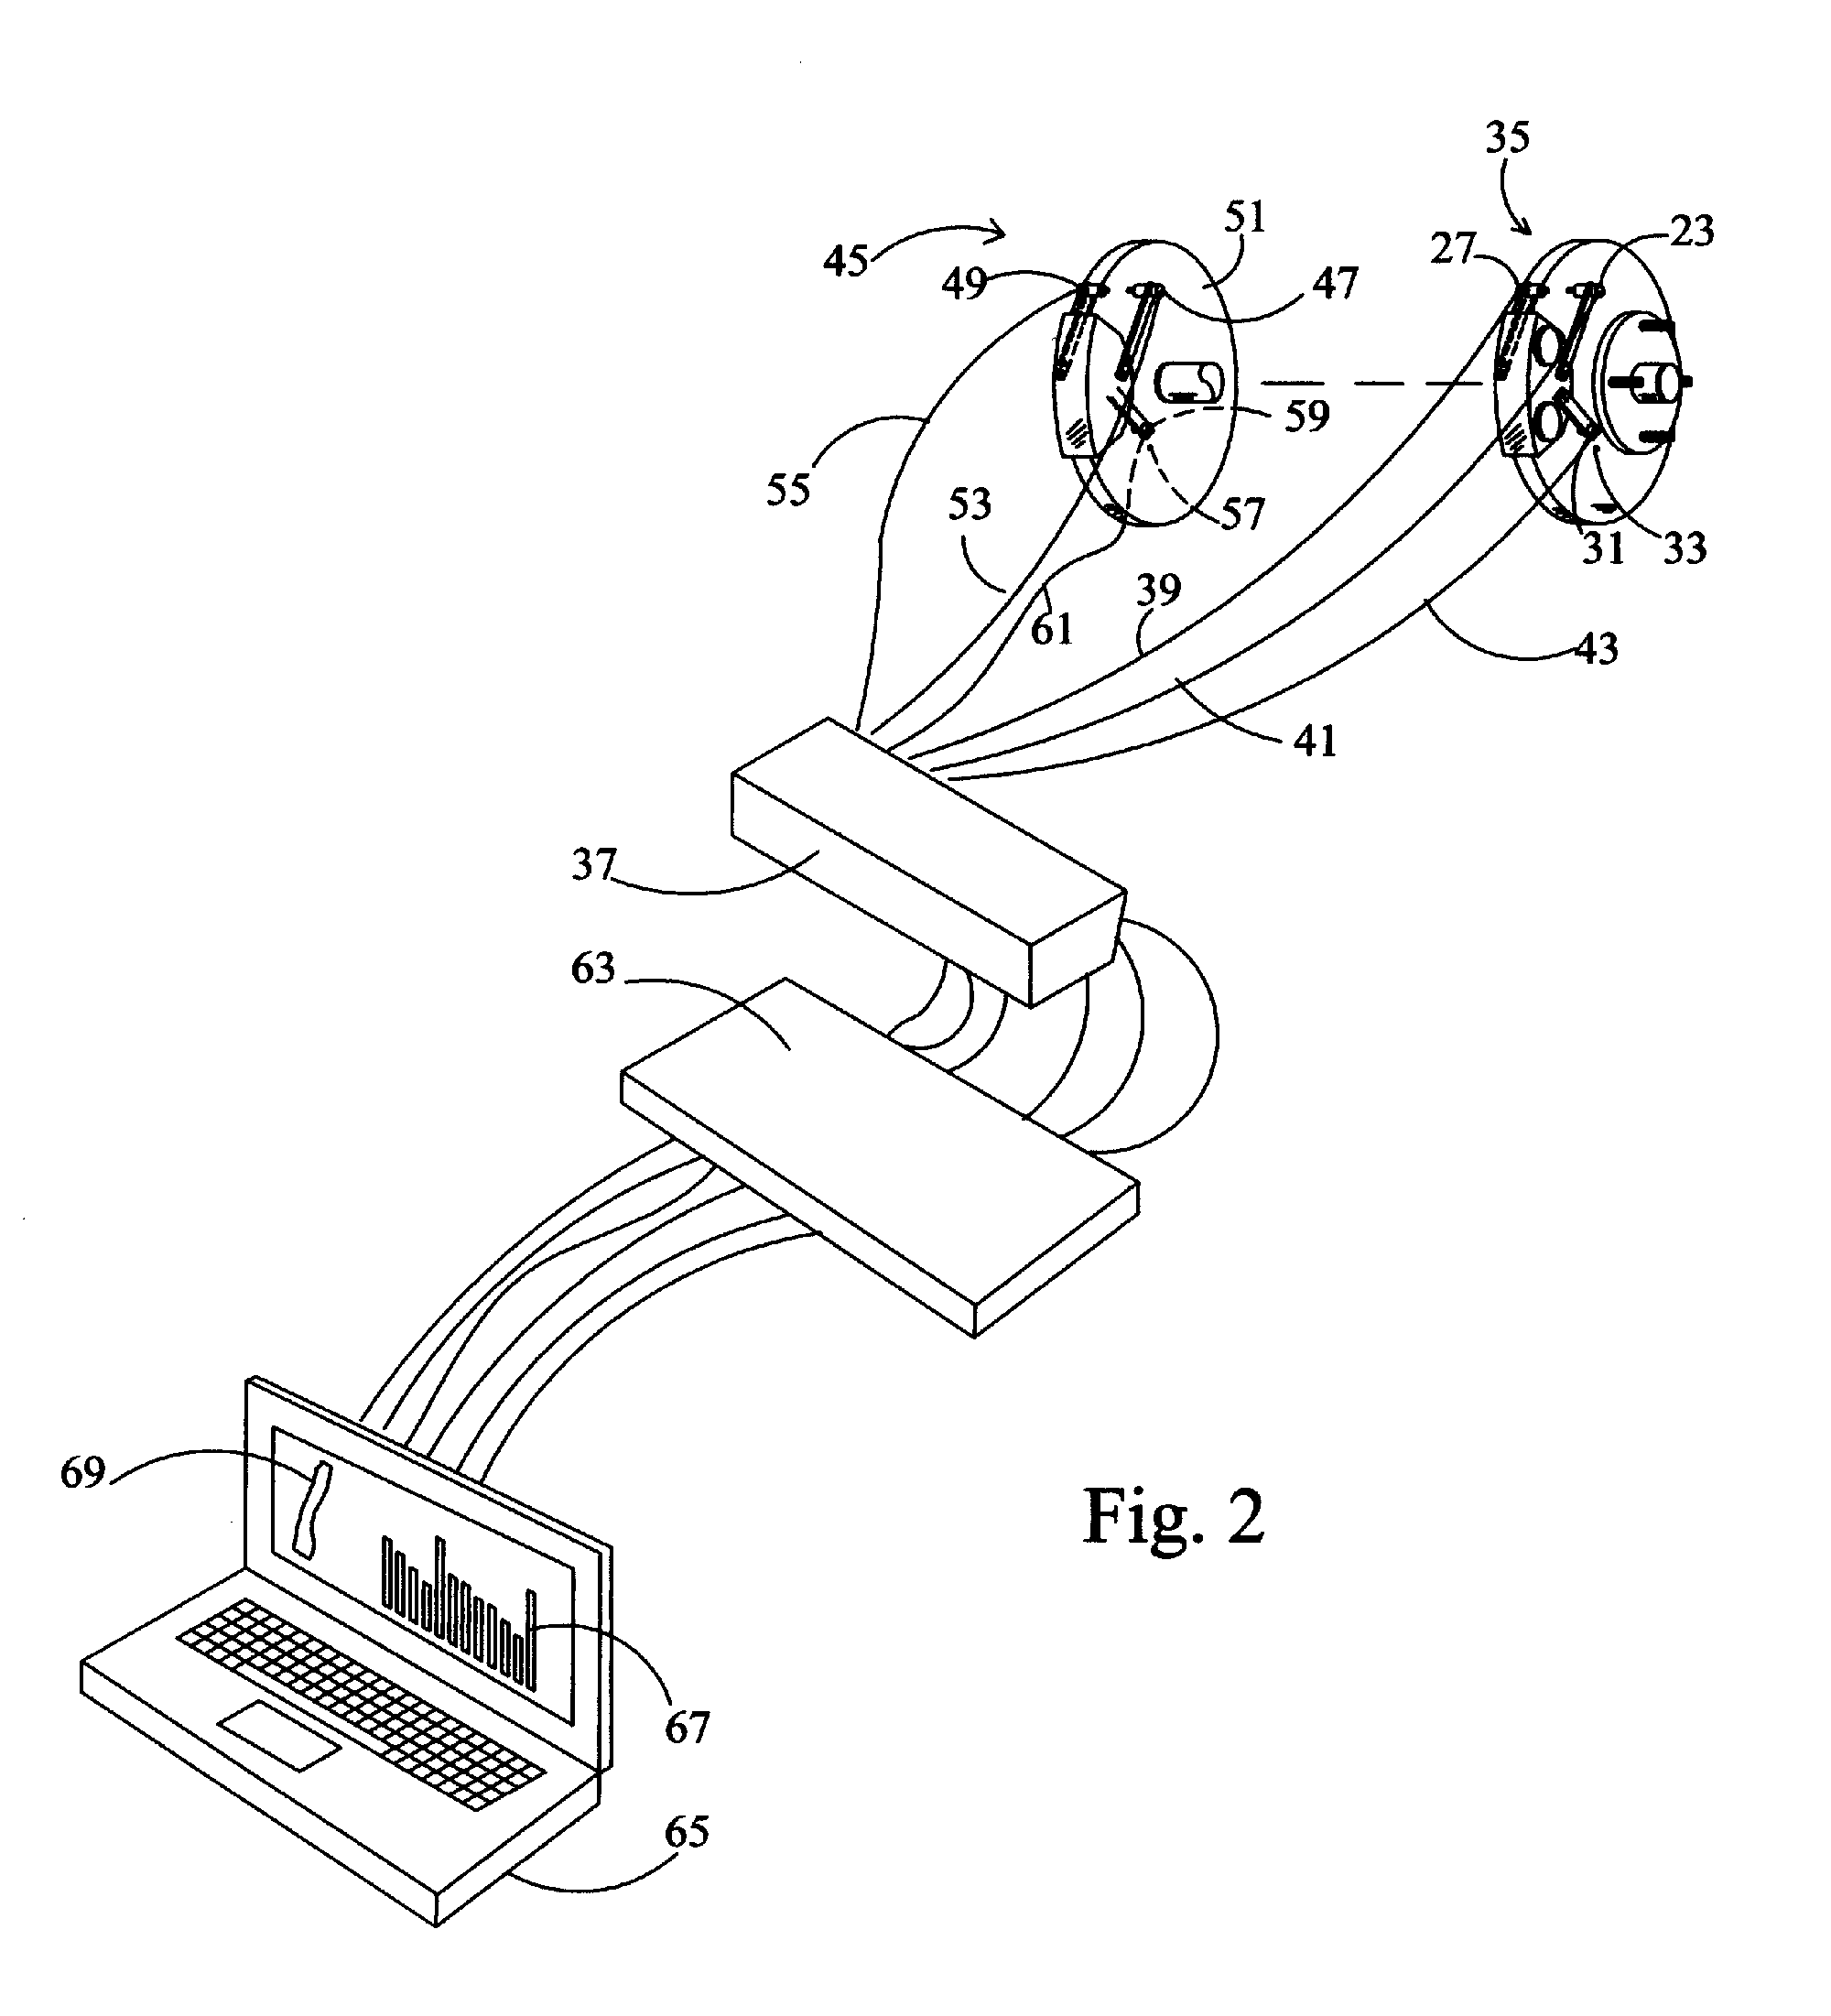 Method of evaluating a disc brake rotor